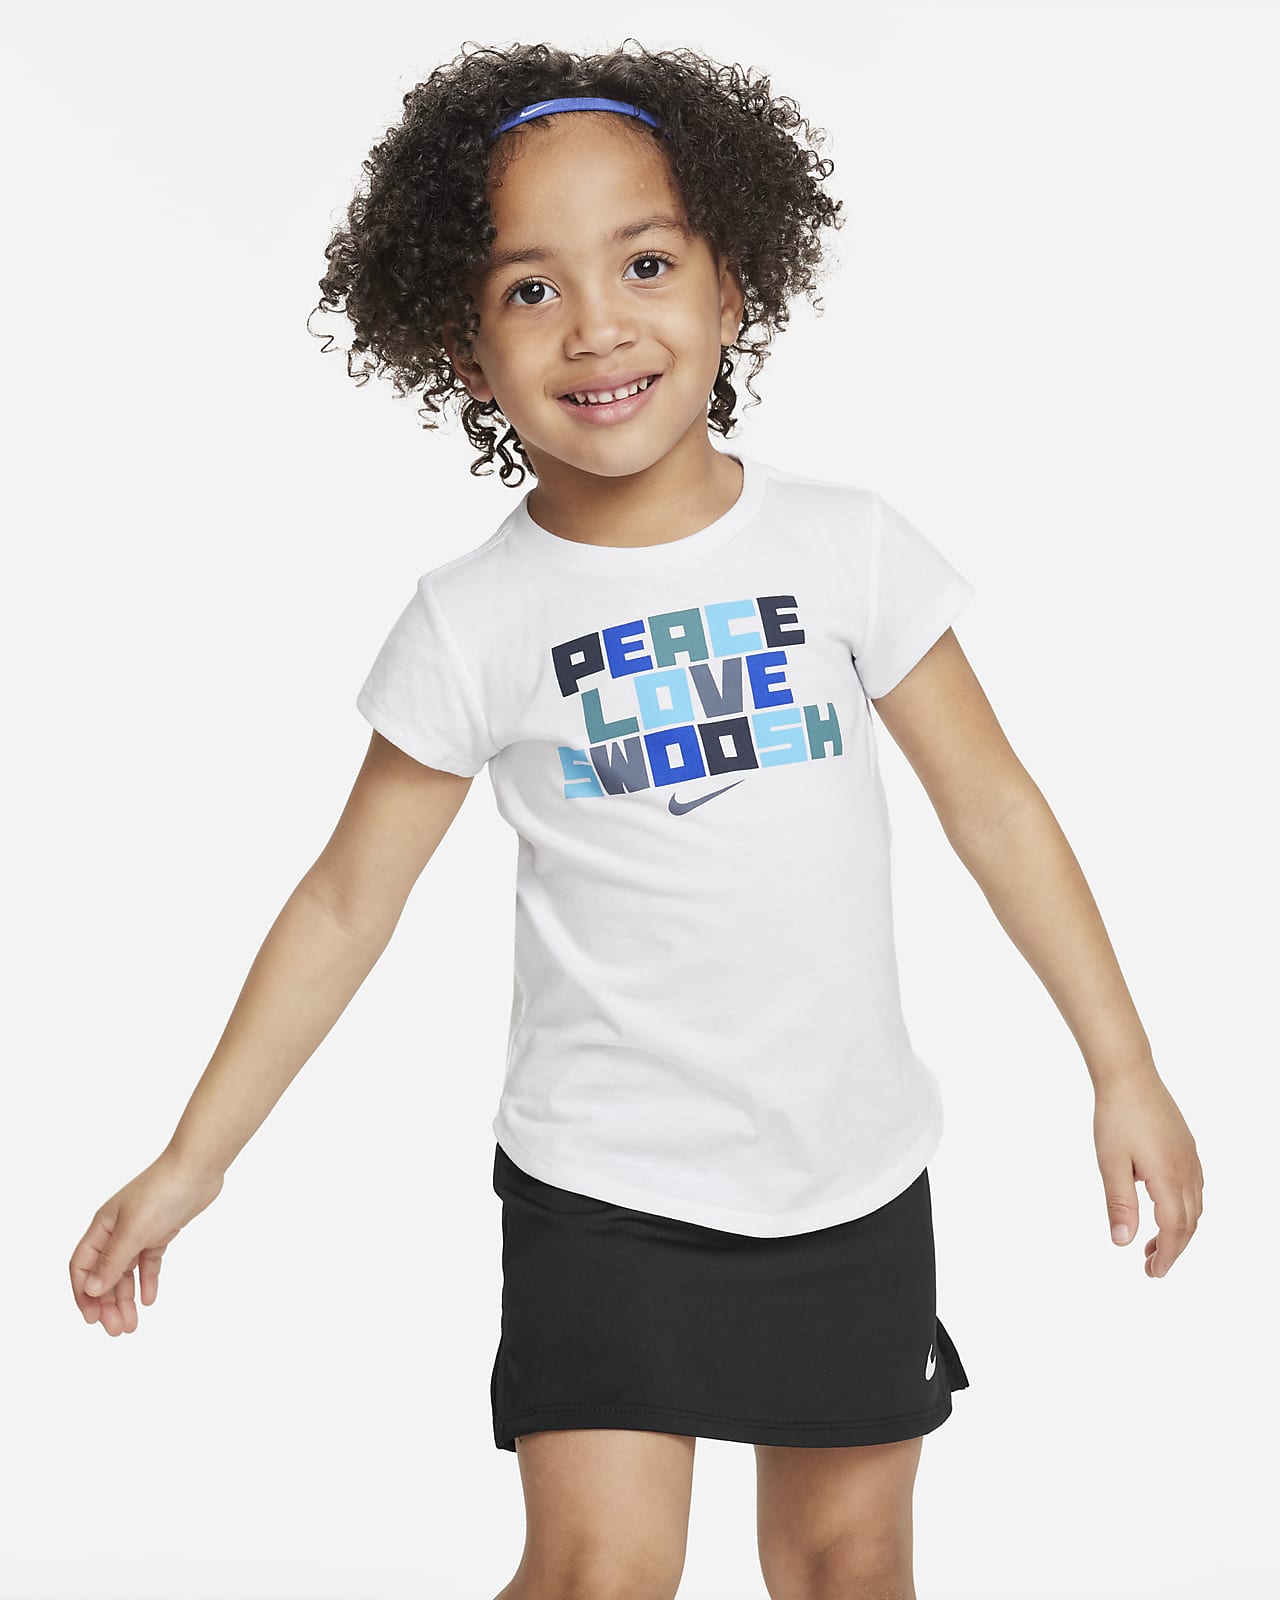 Nike Snack Pack Verbiage Tee Toddler T-Shirt